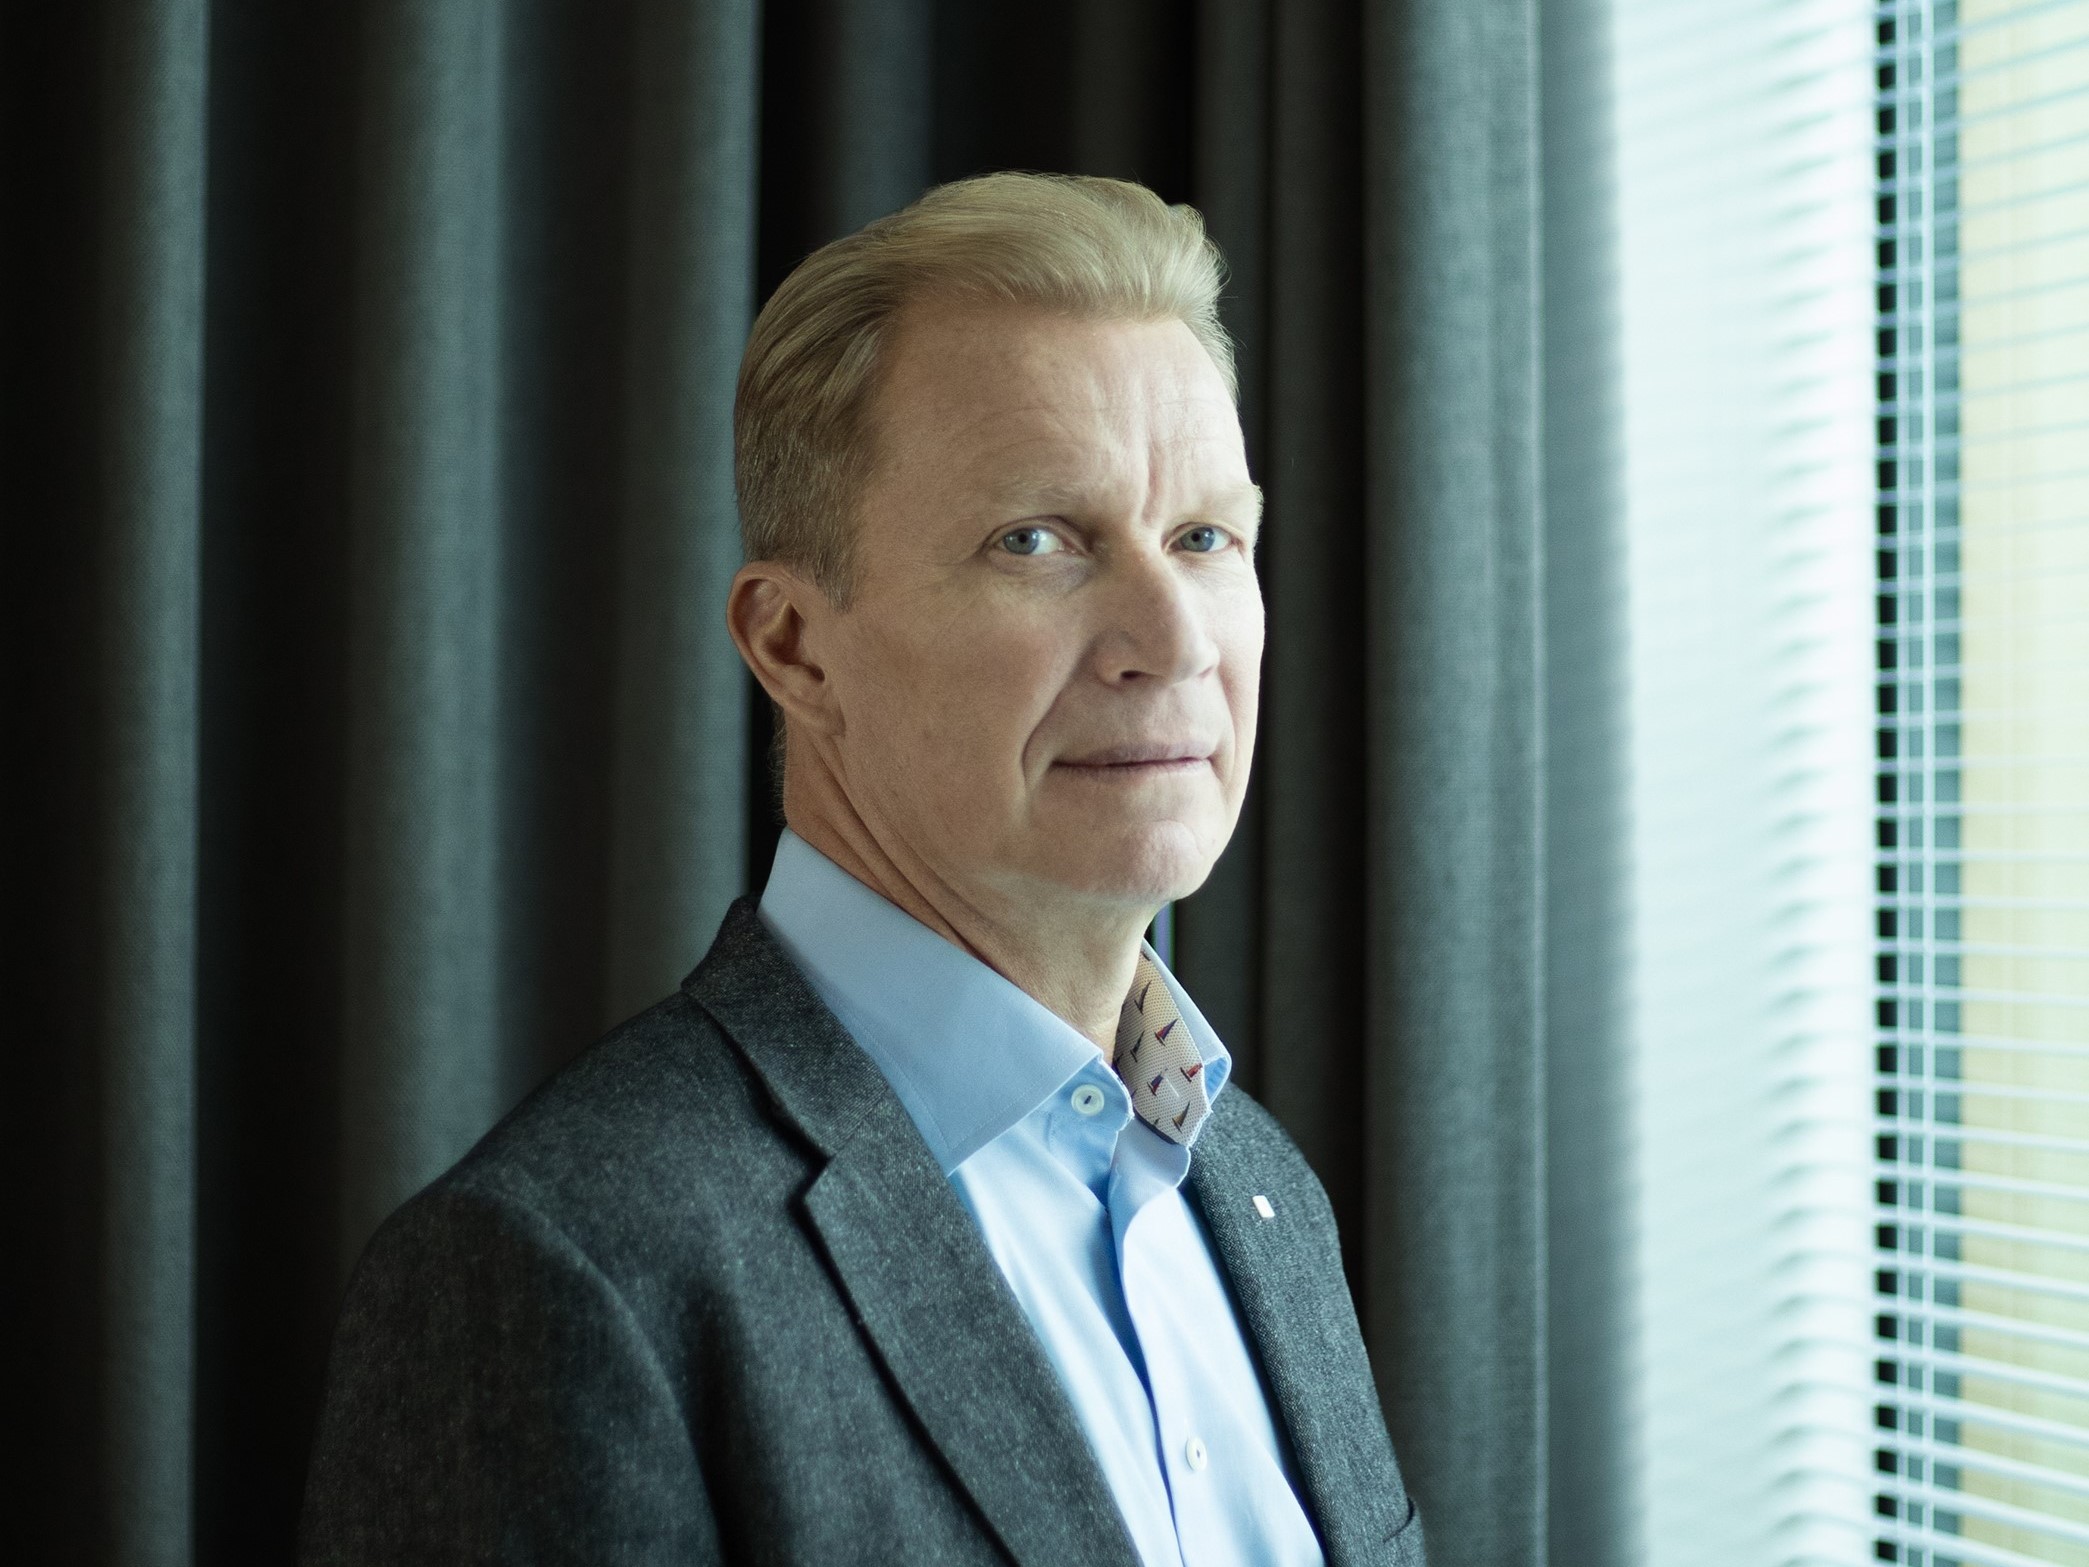 Mika Anttonen, Chairman of the Board of Directors